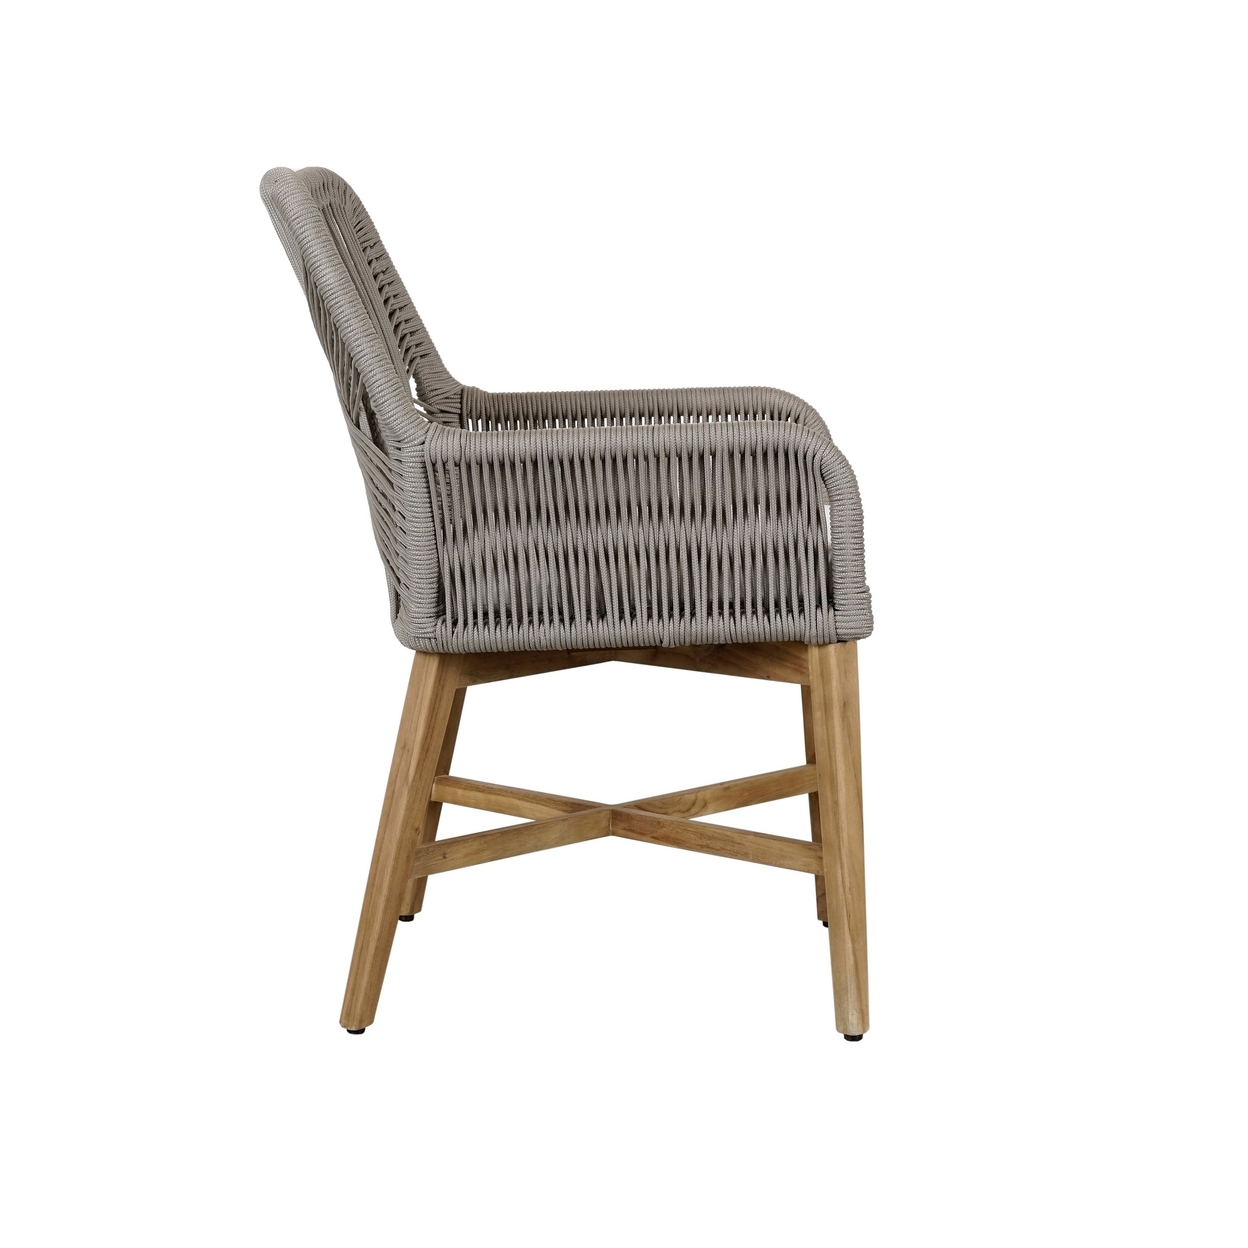 Navi 25 Inch Outdoor Dining Chair, Woven Rope, Ash Gray, Brown Teak Wood -Saltoro Sherpi